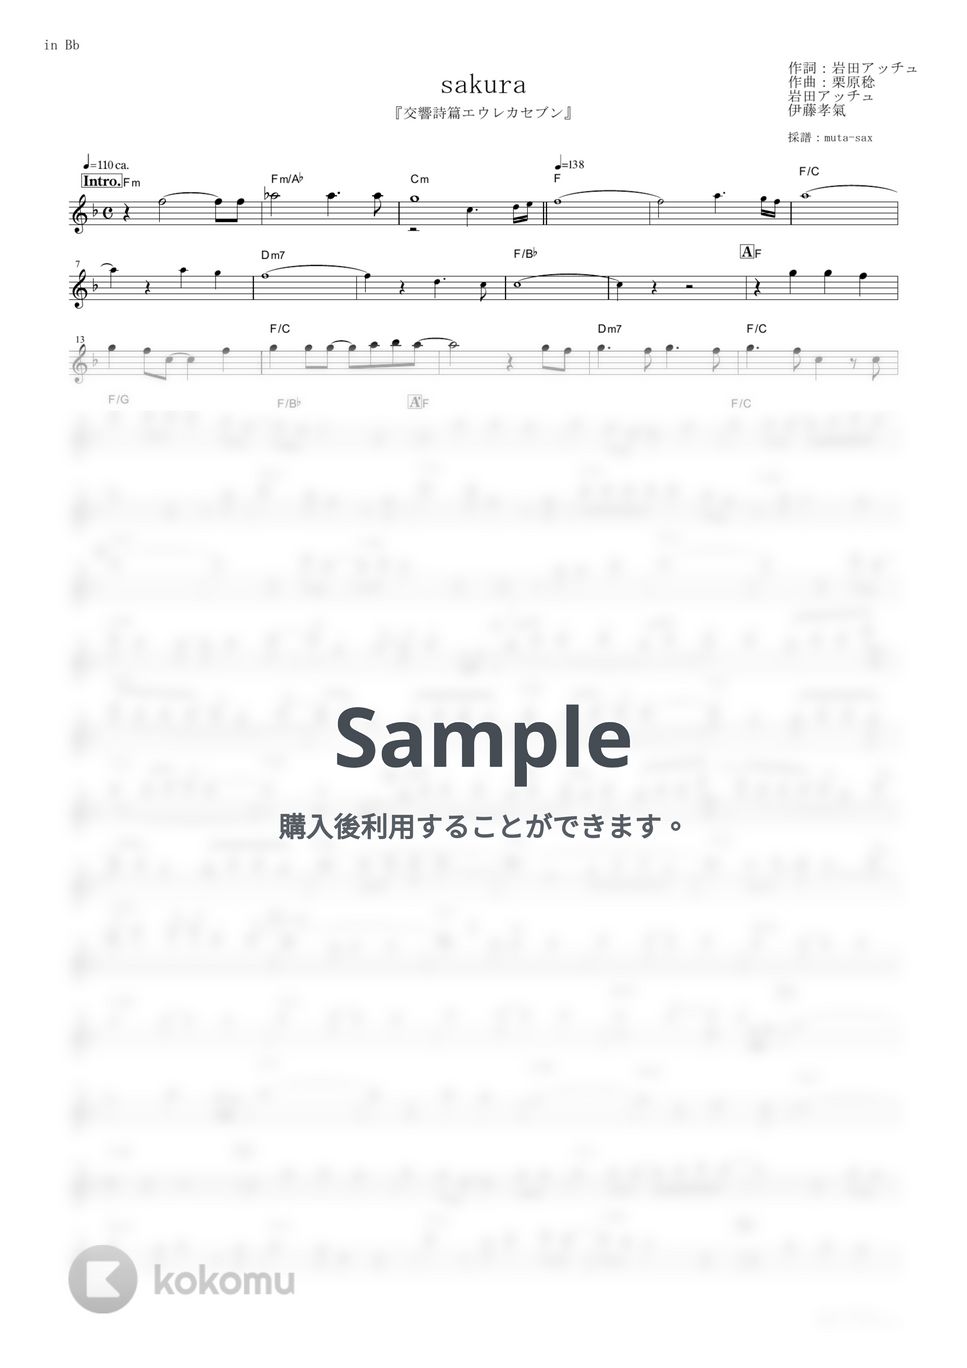 NIRGILIS - sakura (『交響詩篇エウレカセブン』 / in Bb) by muta-sax